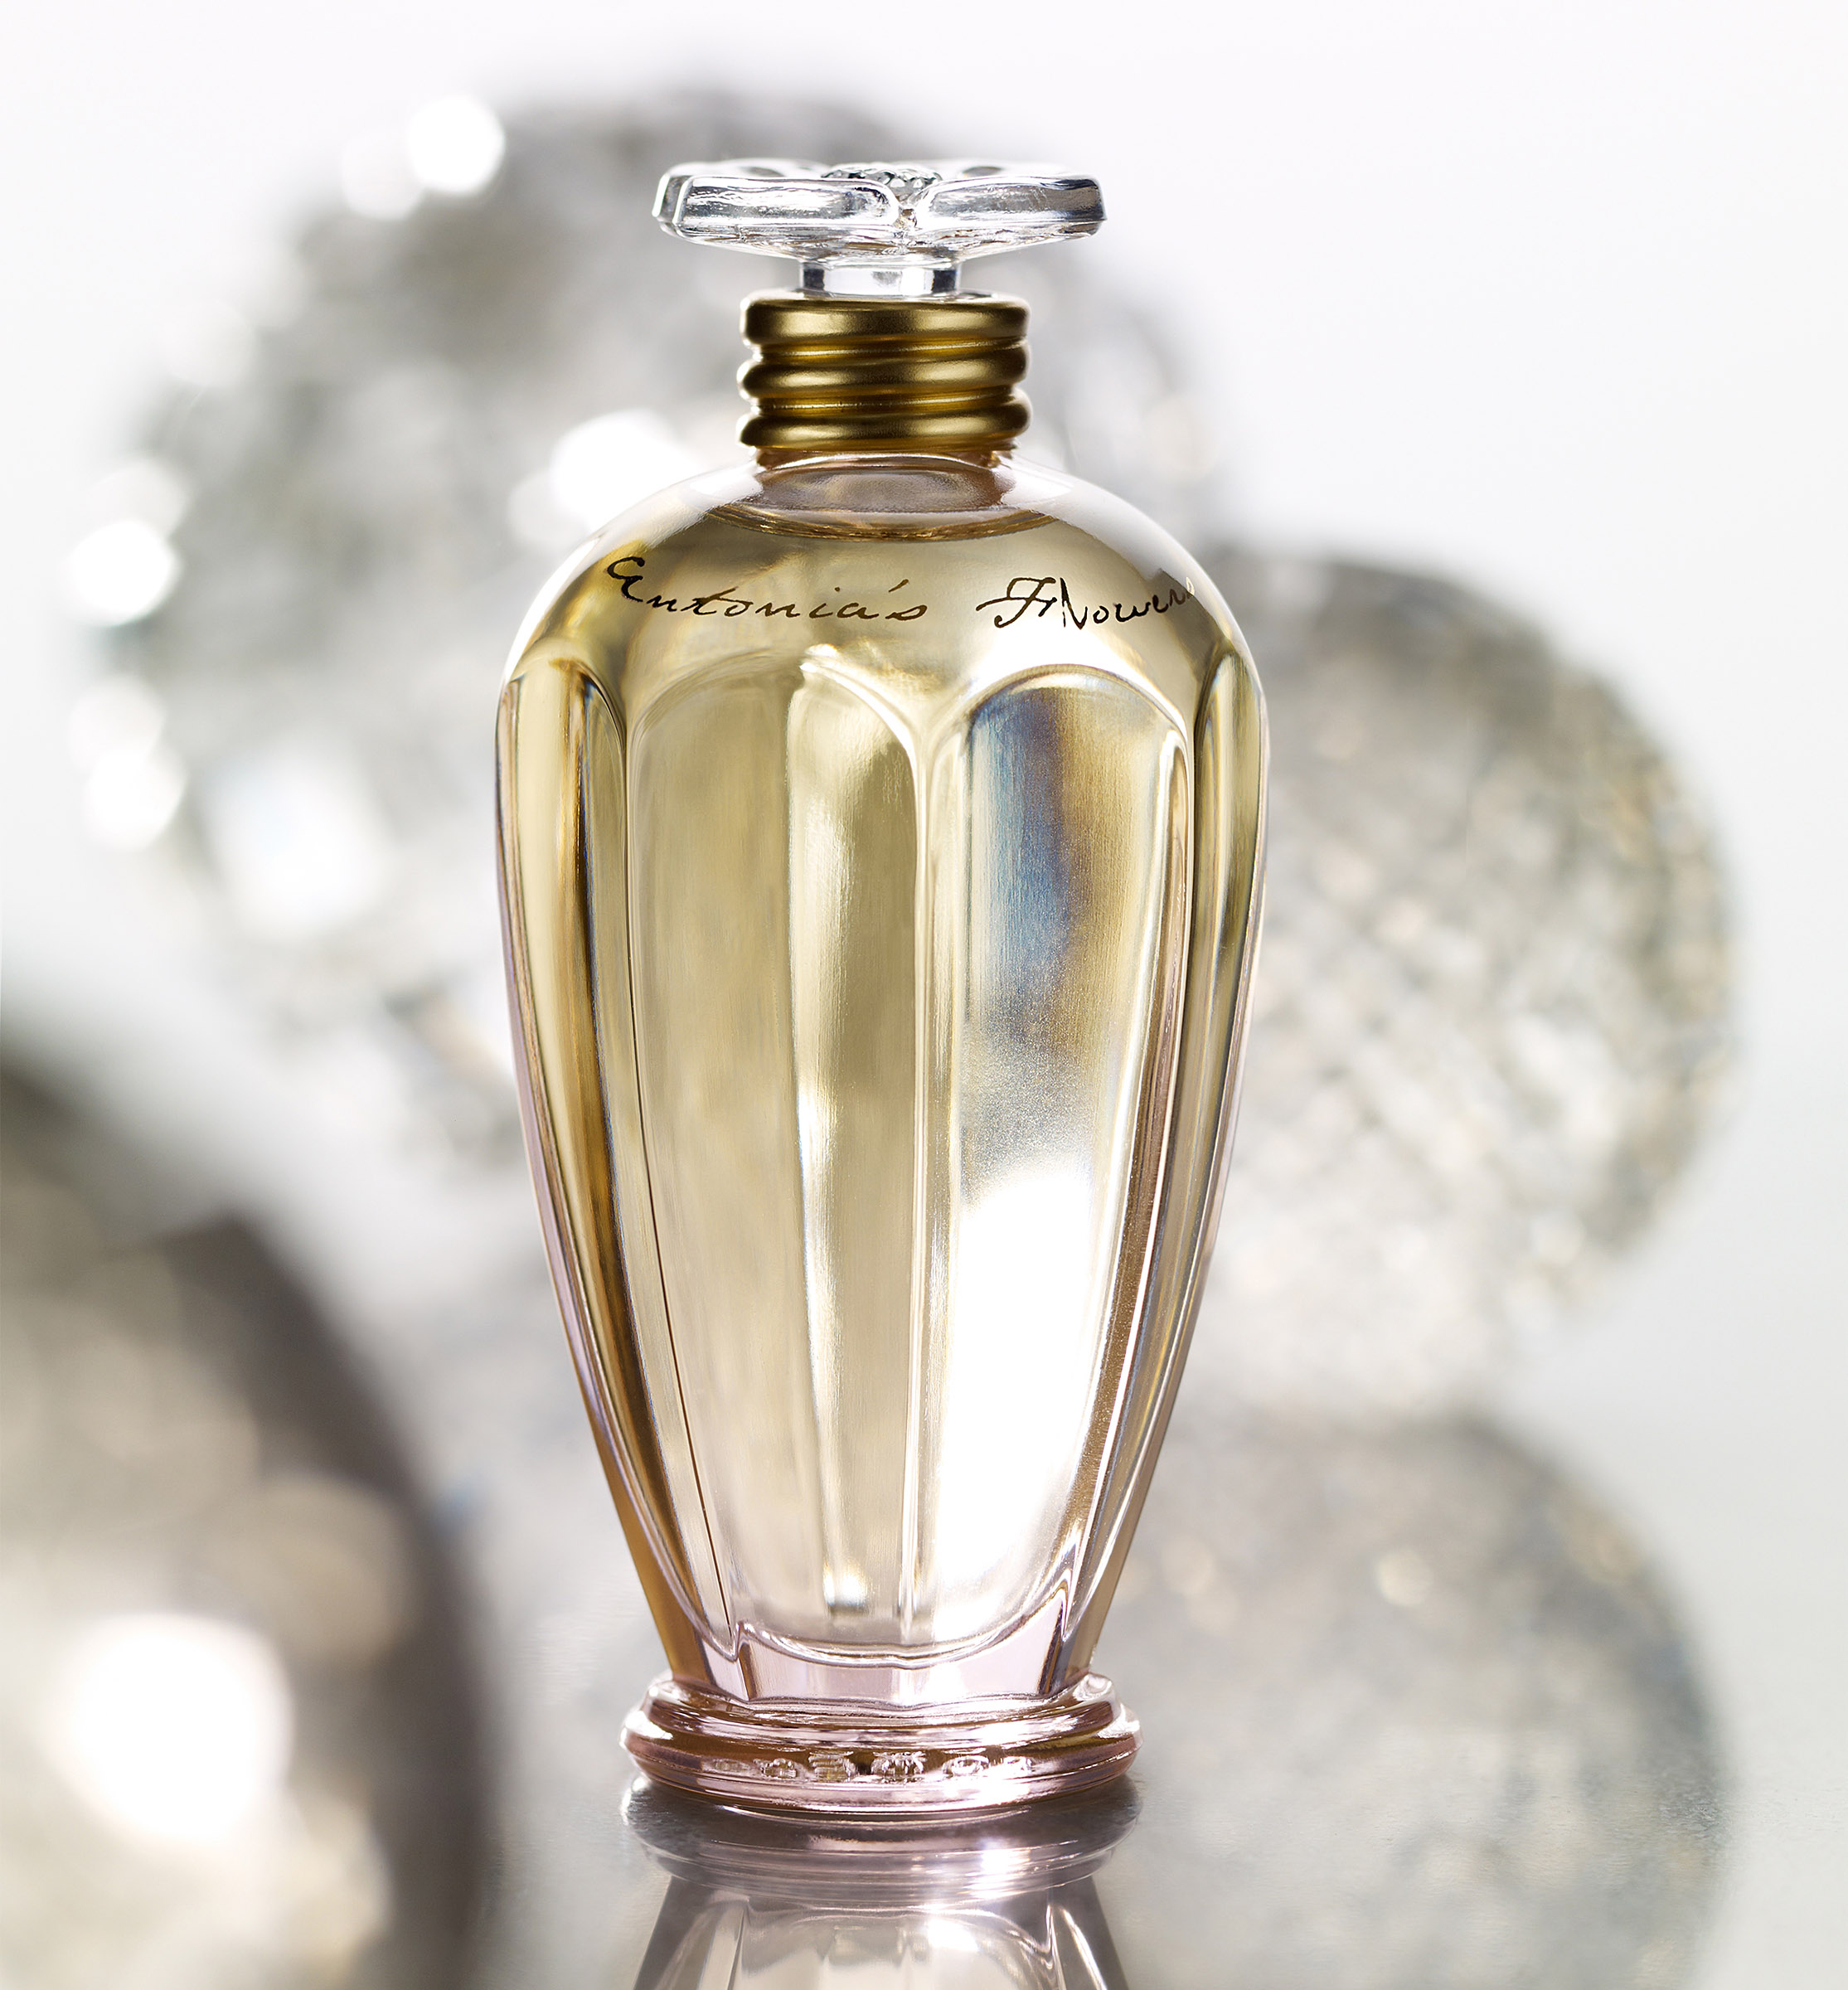 20140402-perfume-test-108489-copy-2